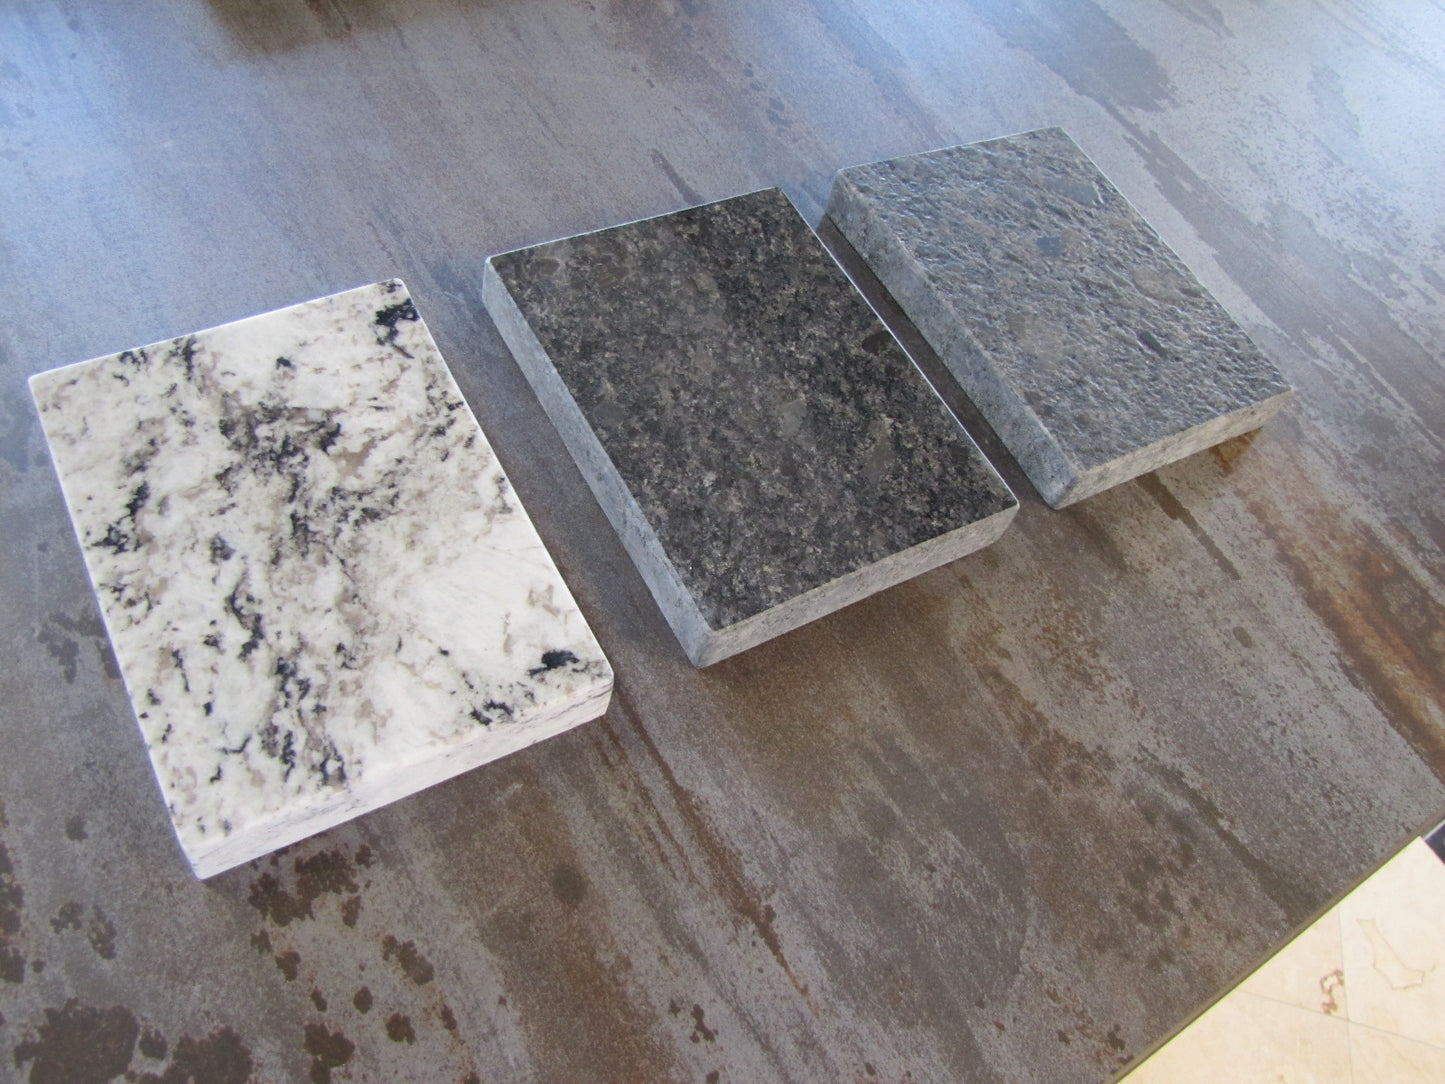 4 Granite Tooling Slabs - 6" x 8" - Leatherwork Pieces - Honed Edges - Natural Stone Slabs